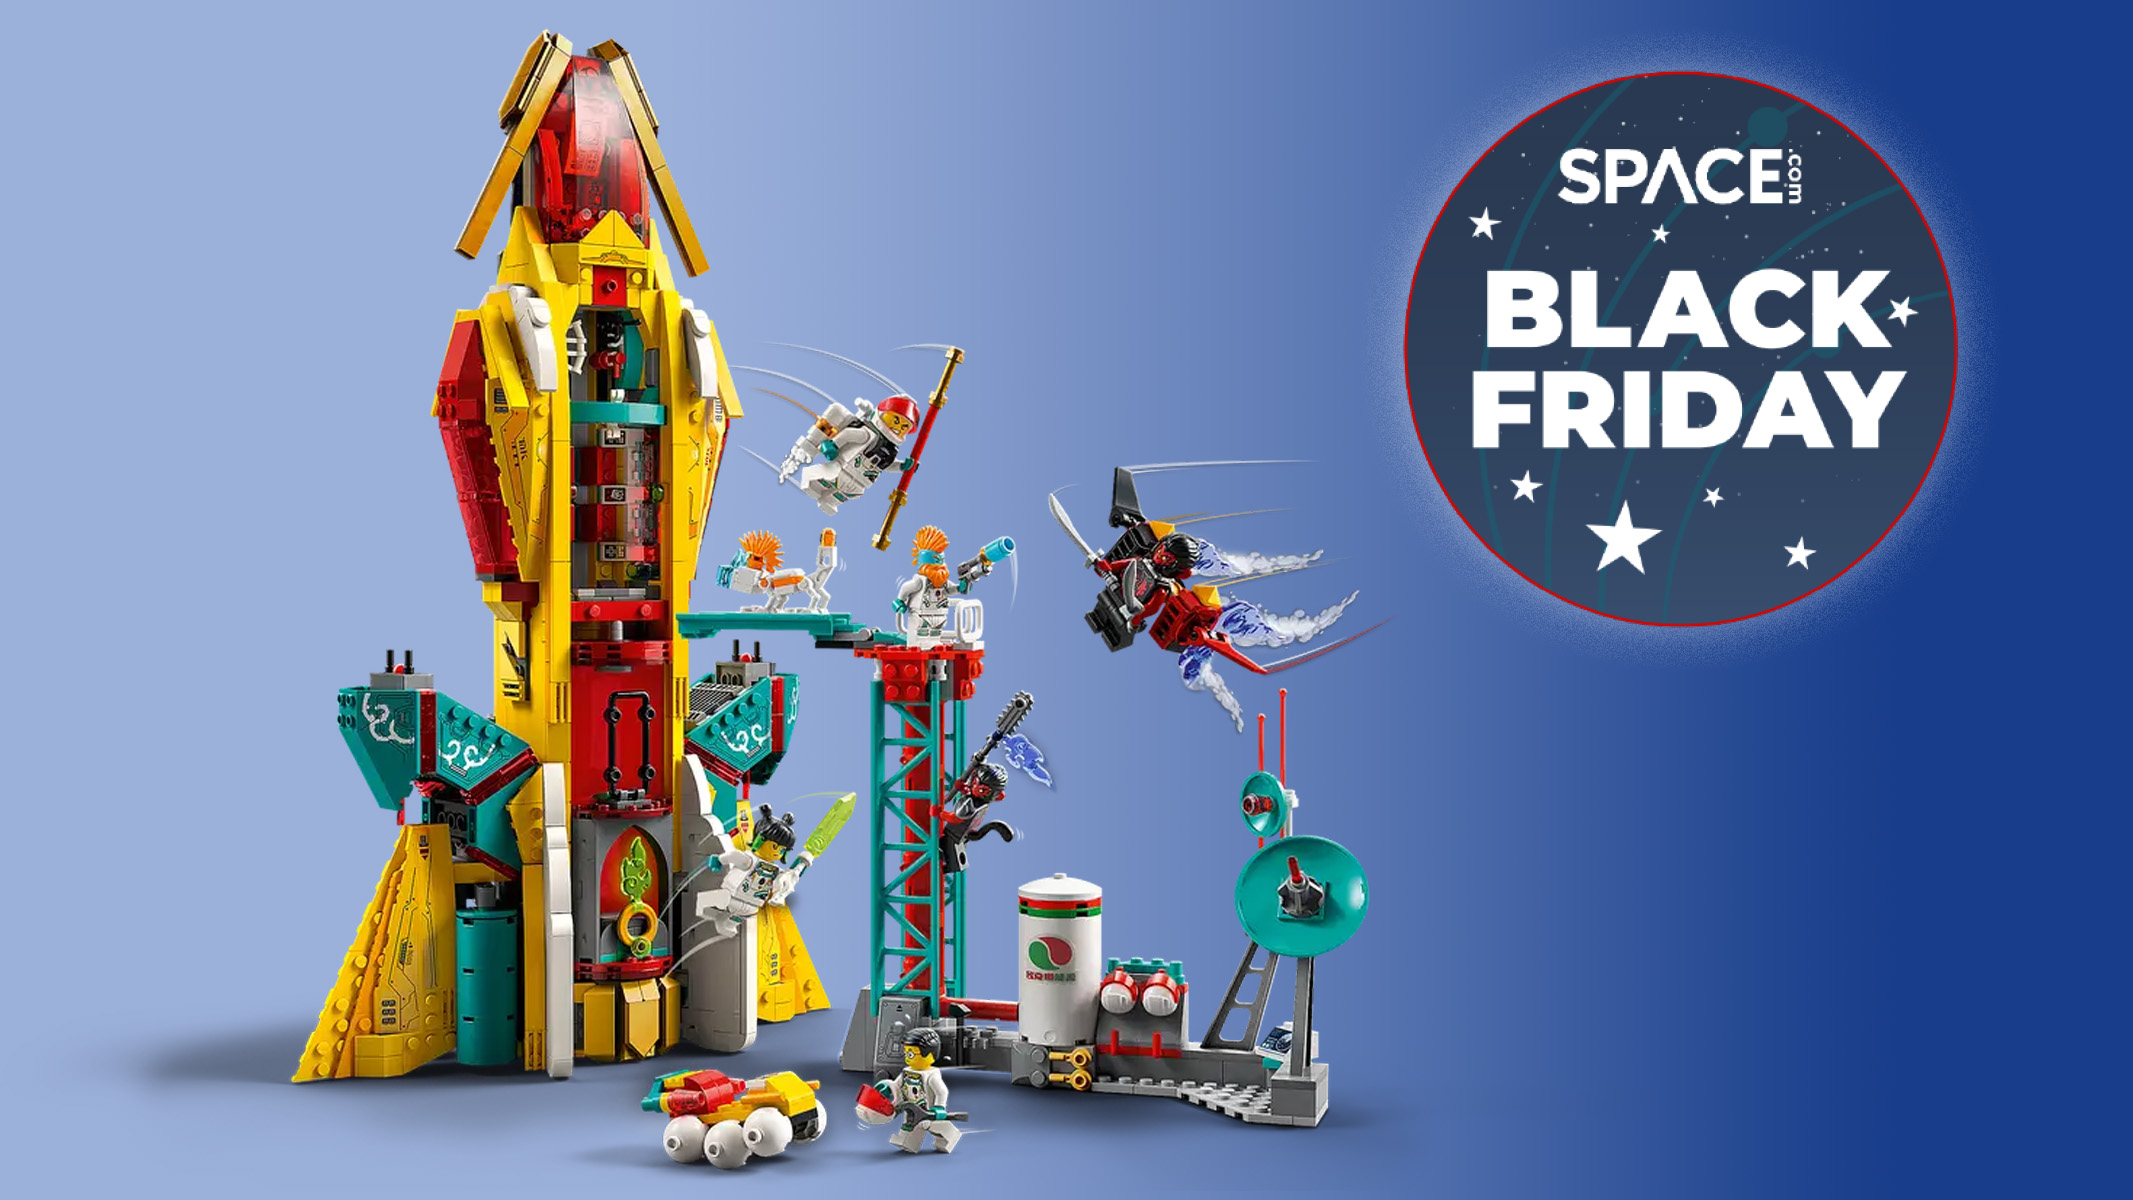 Save 30% on the gigantic, fun-loving Lego Monkie Kid’s Galactic Explorer Space